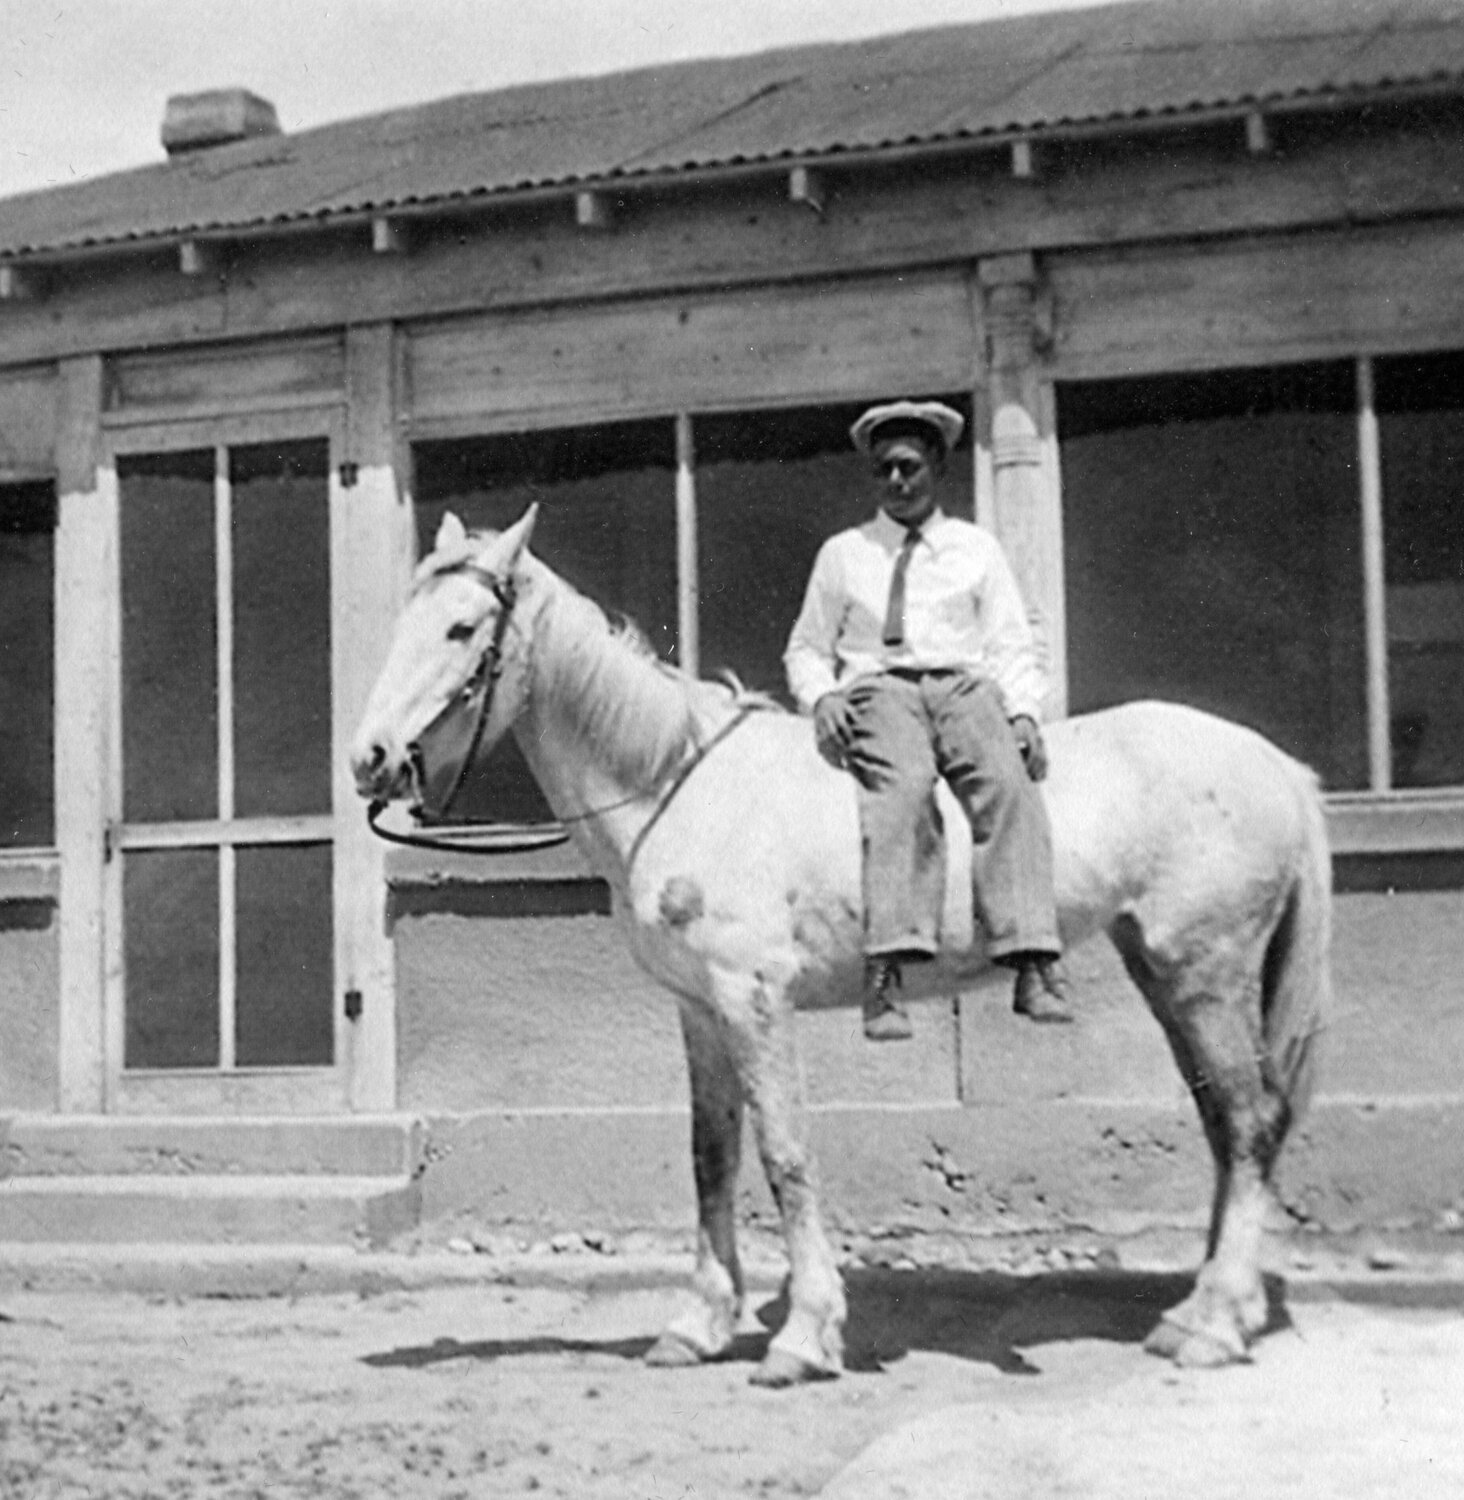 Jose Felipe “Lipe” Montoya "sitting" on his horse, c. 1940.